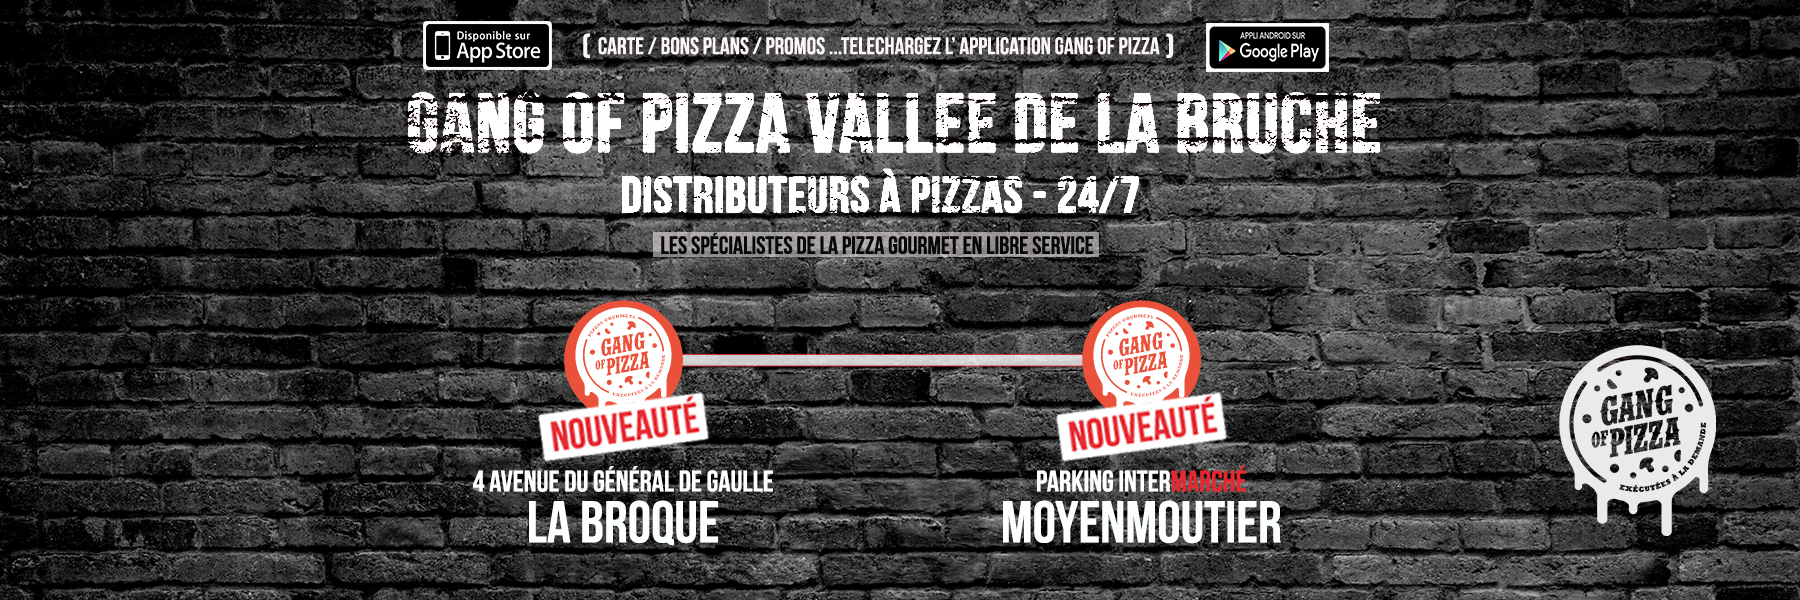 distributeur-vallee-de-la-bruche-Gang-Of-Pizza-debarque-a-la-broque-4-avenue-du-general-de-gaulle-et-a-moyenmoutier-7-avenue-du-general-de-gaulle-le-rabodeau-pizzas-24-7